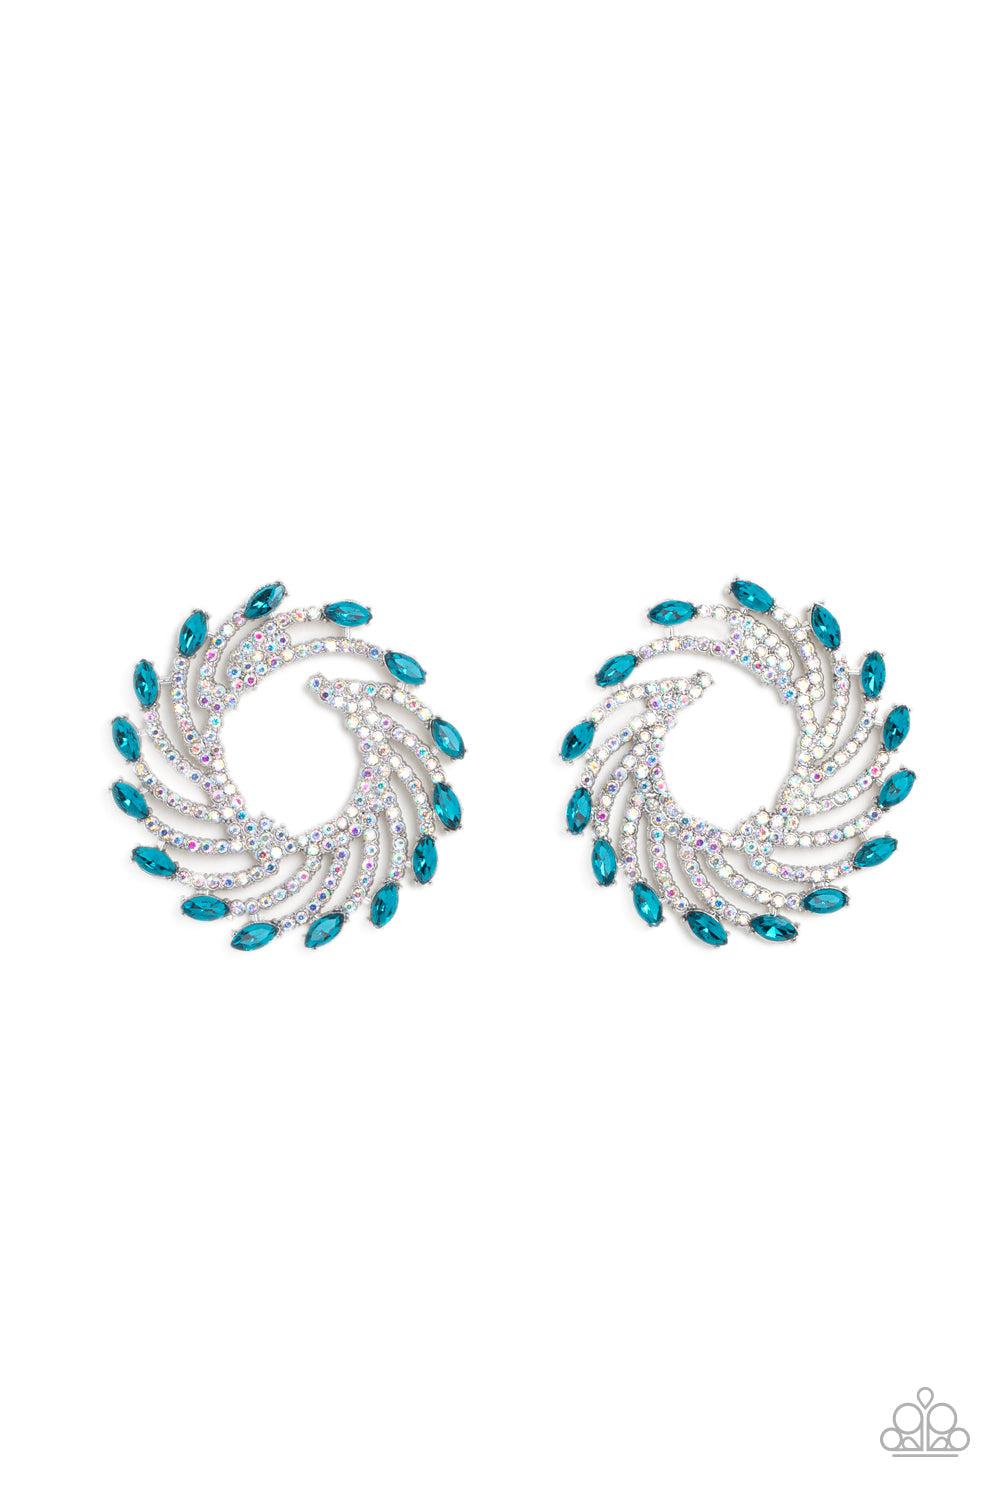 Firework Fanfare Blue Earrings - Paparazzi Accessories- lightbox - CarasShop.com - $5 Jewelry by Cara Jewels